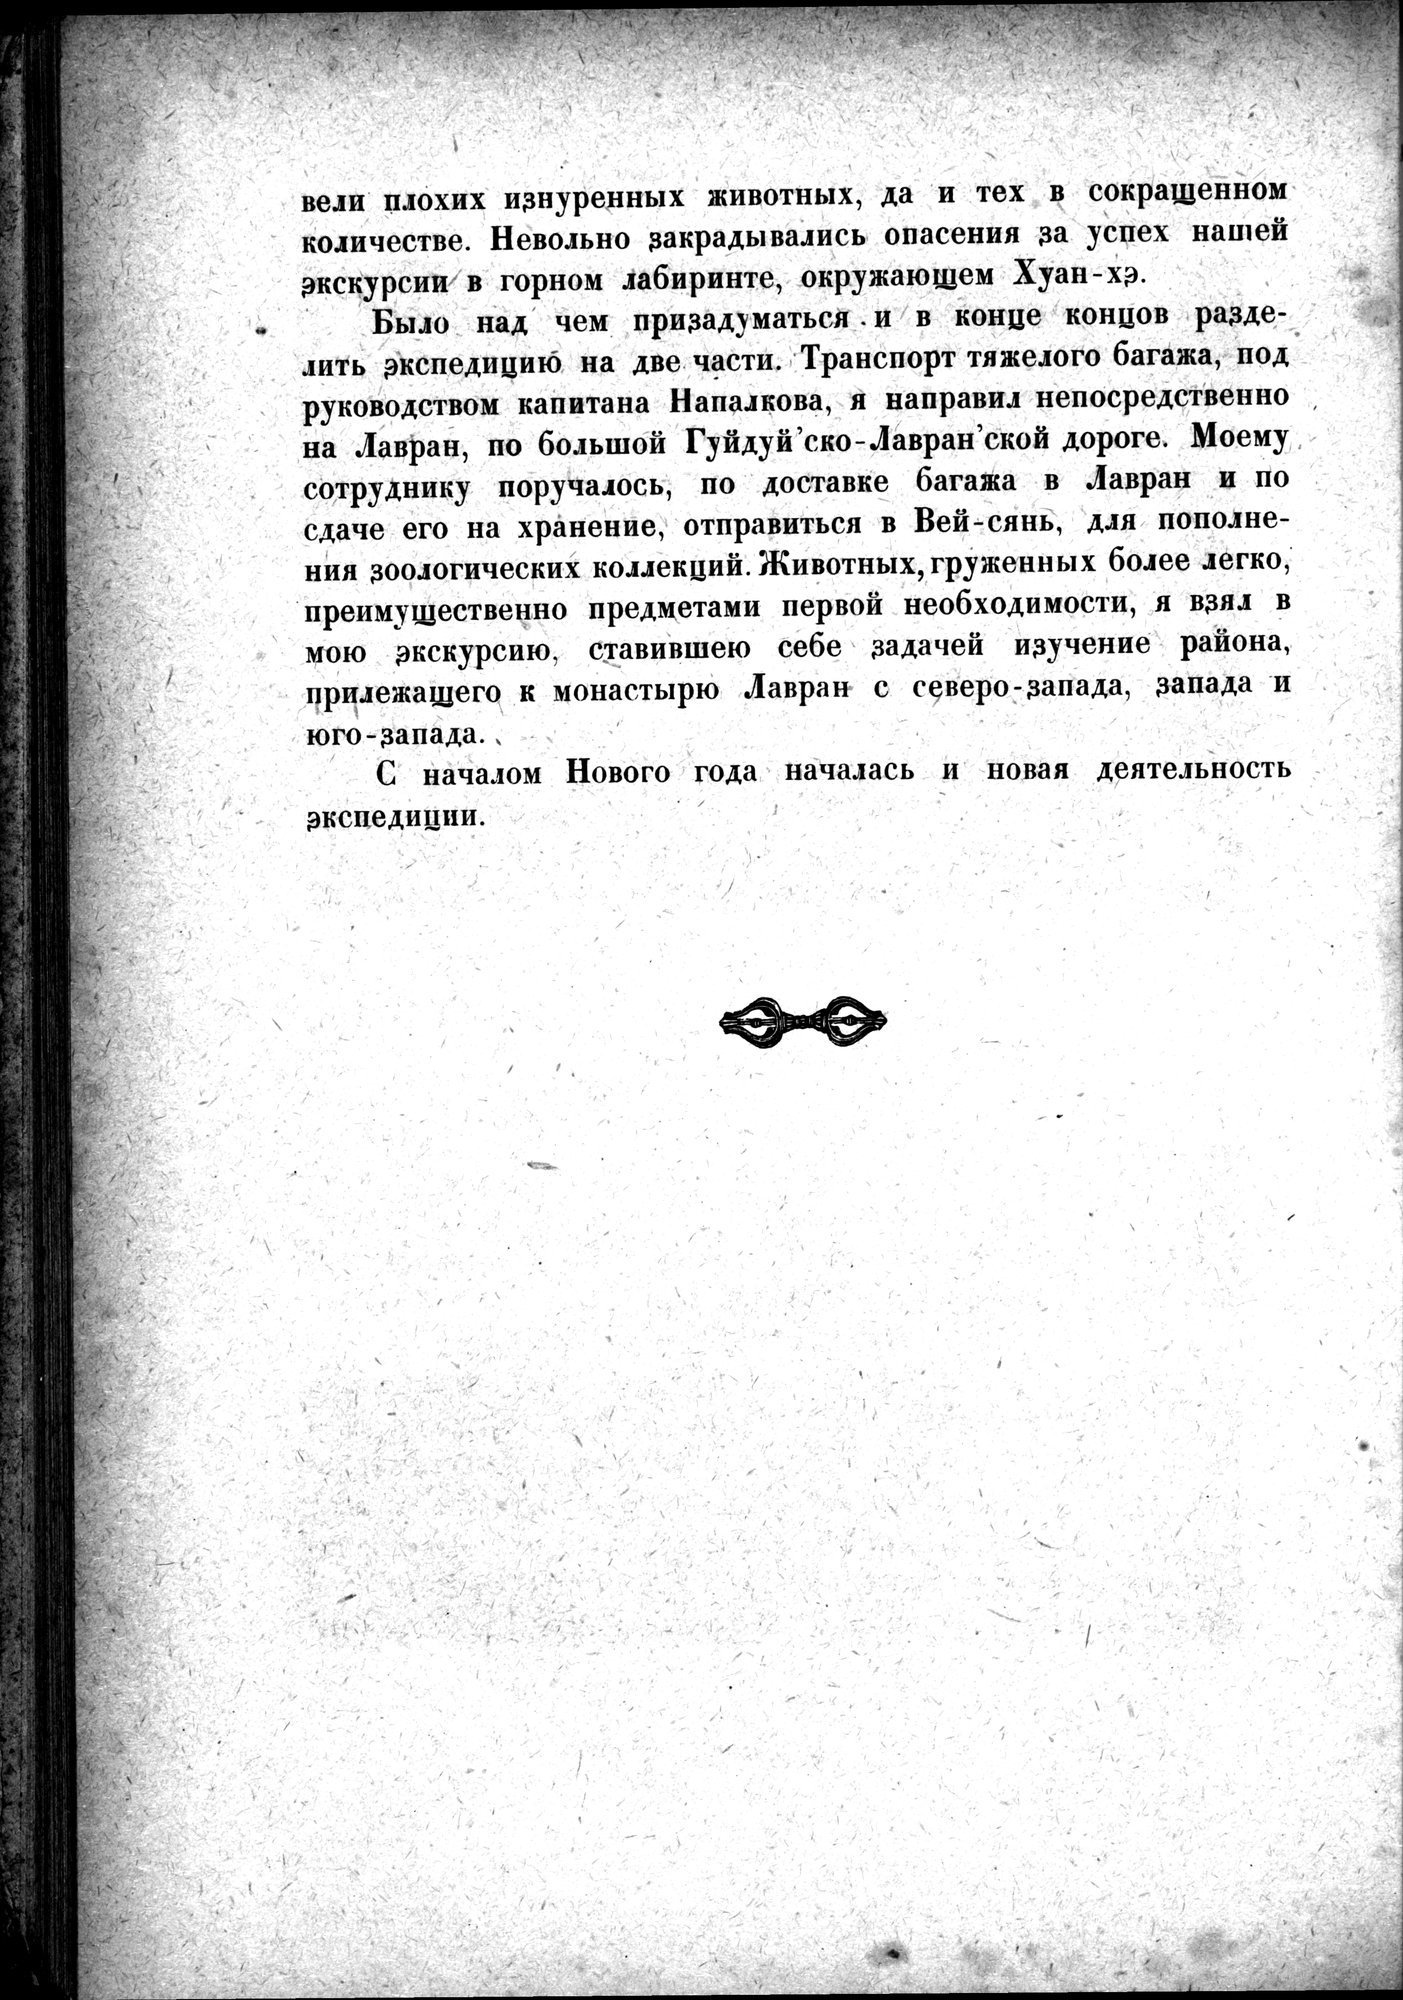 Mongoliya i Amdo i mertby gorod Khara-Khoto : vol.1 / Page 470 (Grayscale High Resolution Image)